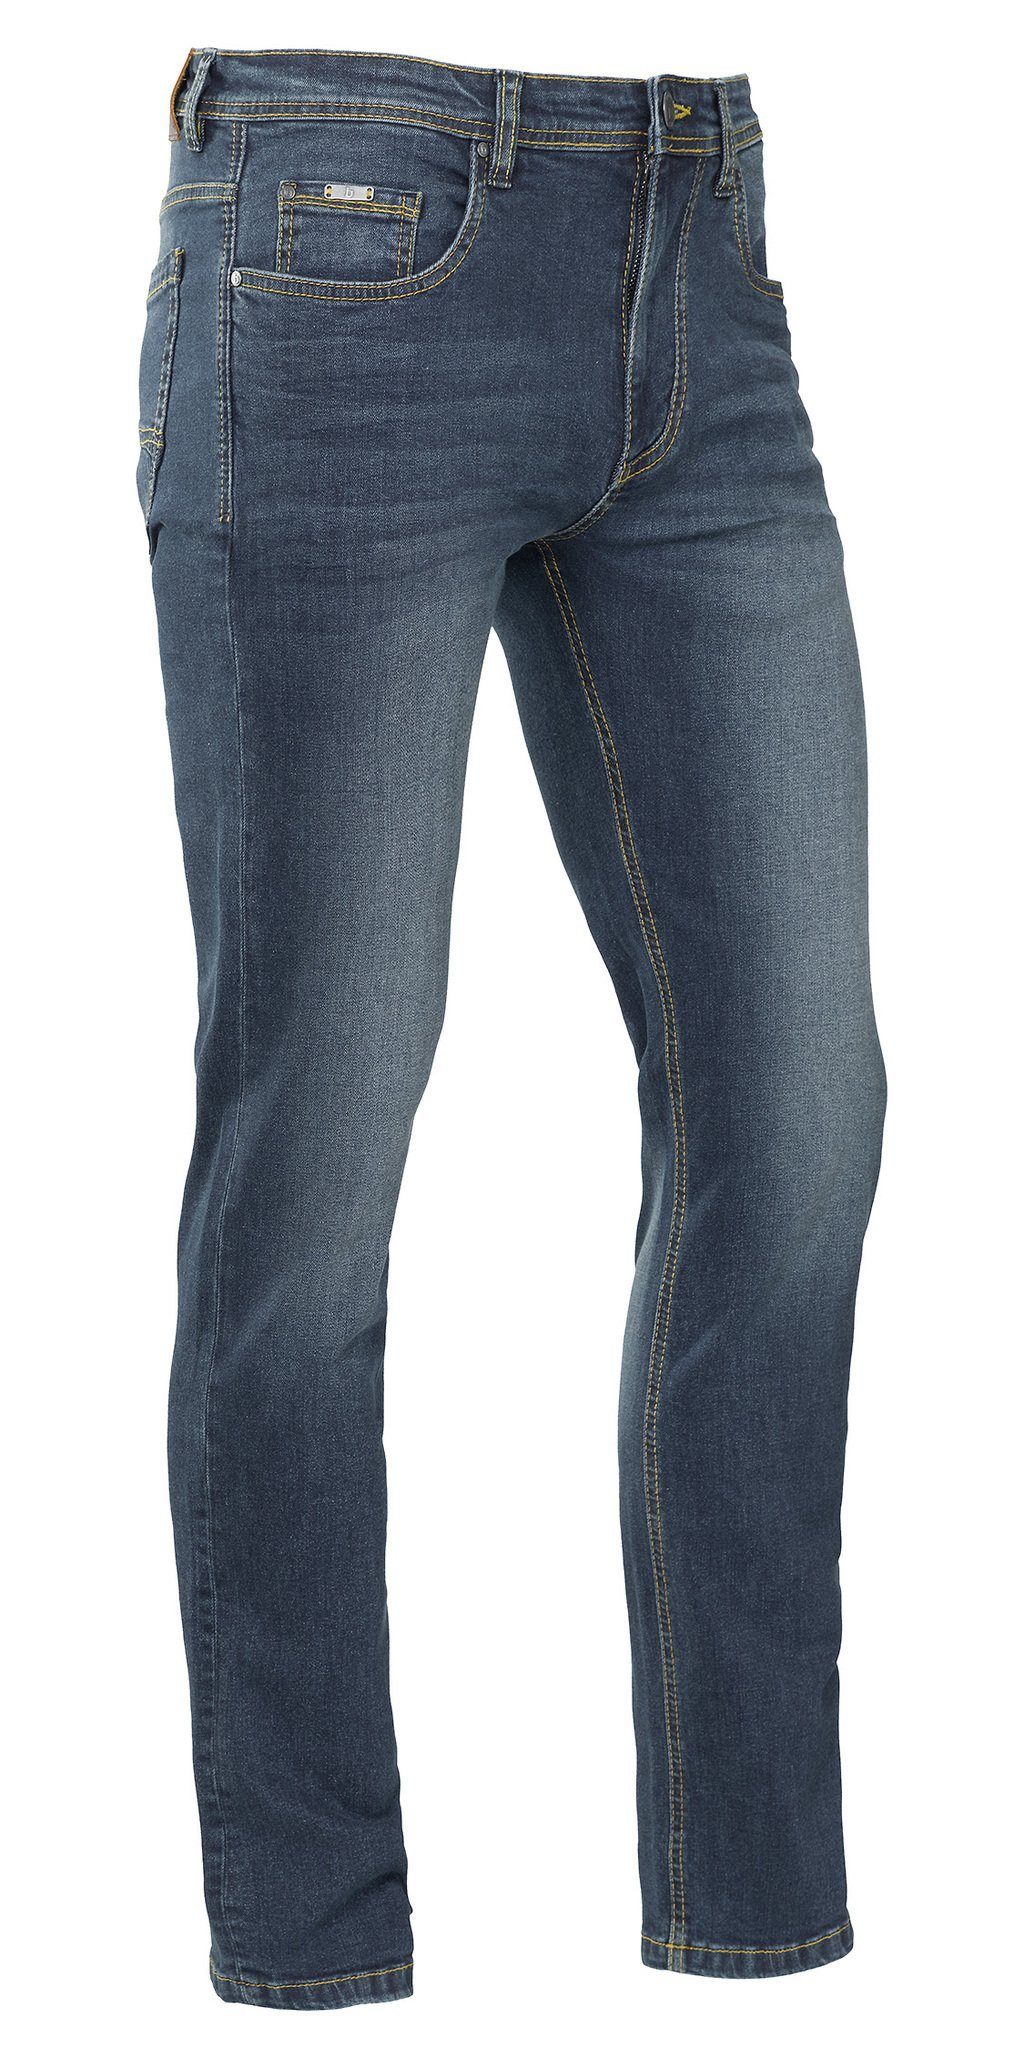 Brams Paris 5-Pocket-Hose Herren Jeans Hose Jason - Regular fit Jeanshose blau C41